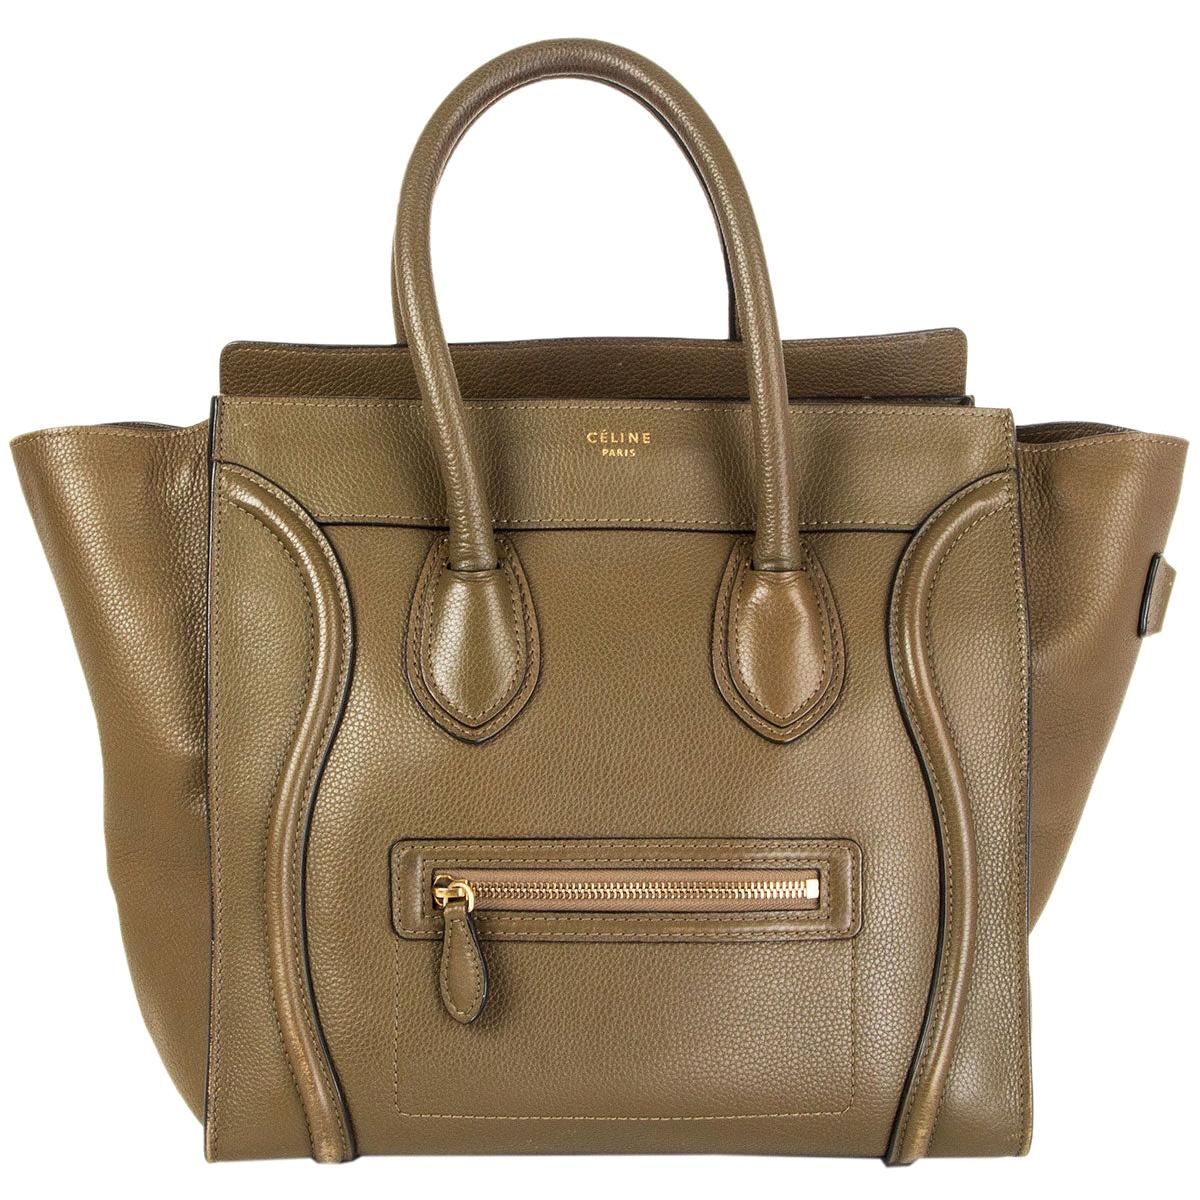 CELINE olive green leather MINI LUGGAGE TOTE Bag